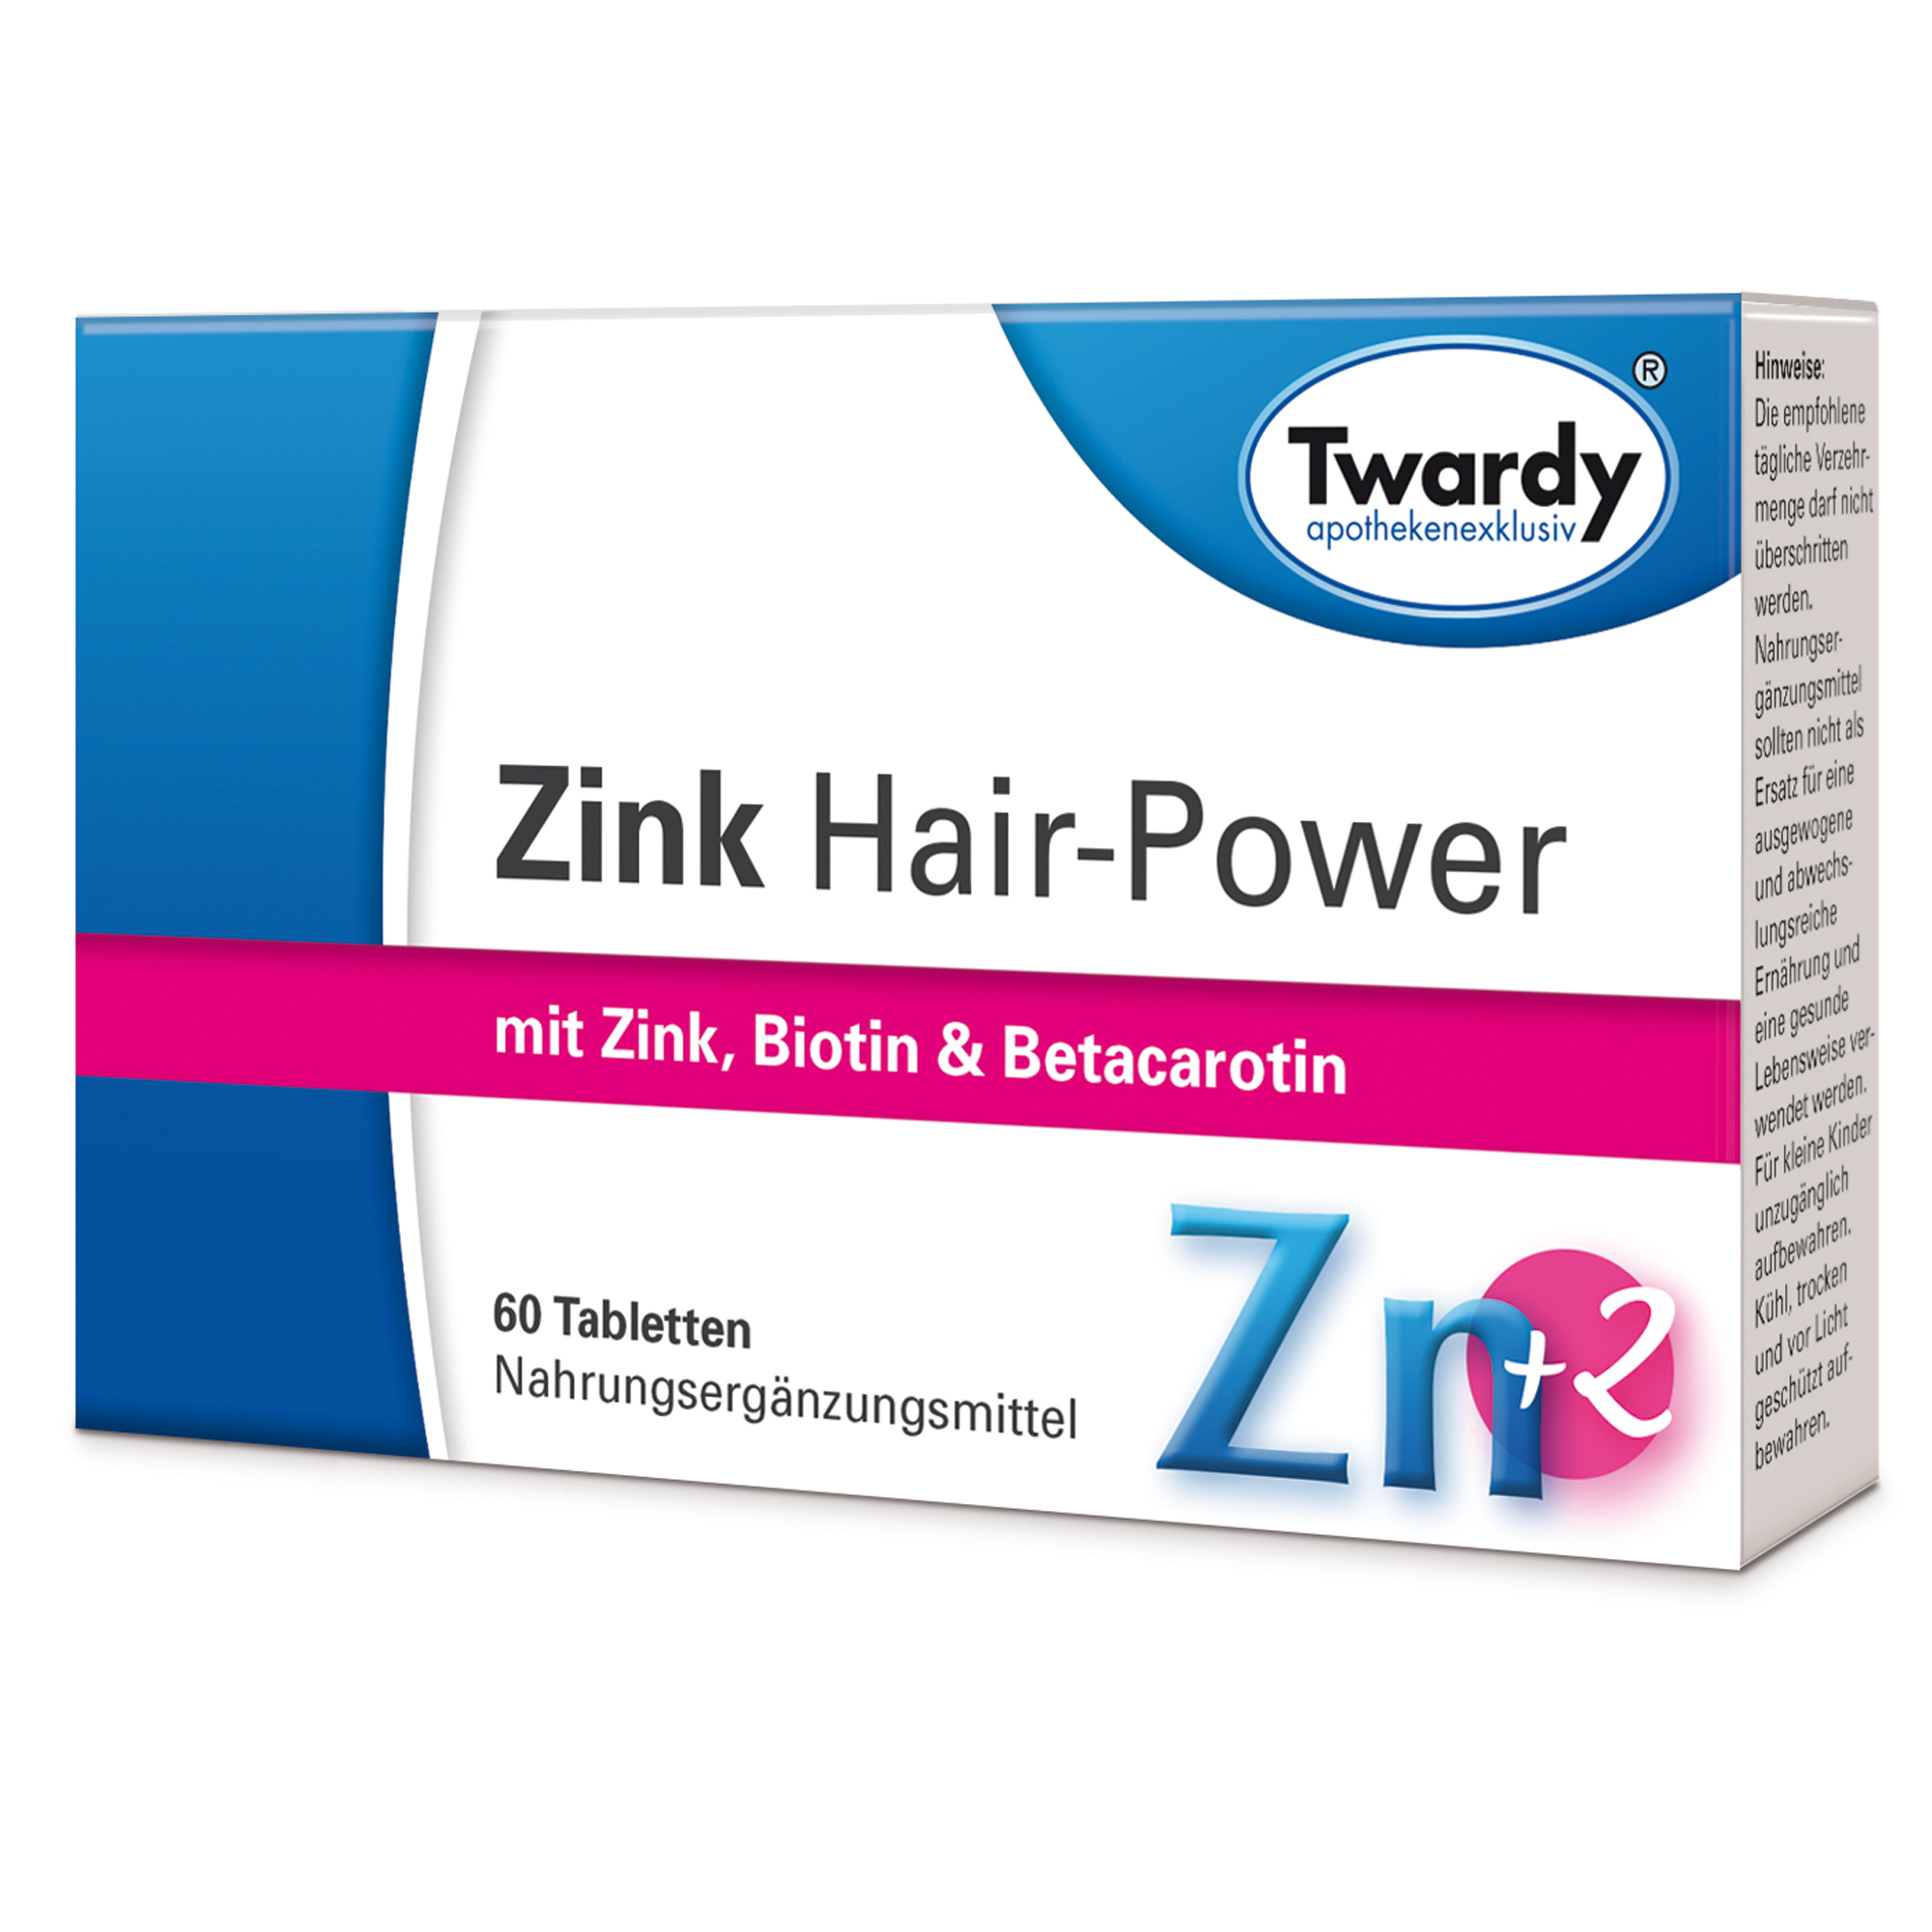 Zink Hair-Power